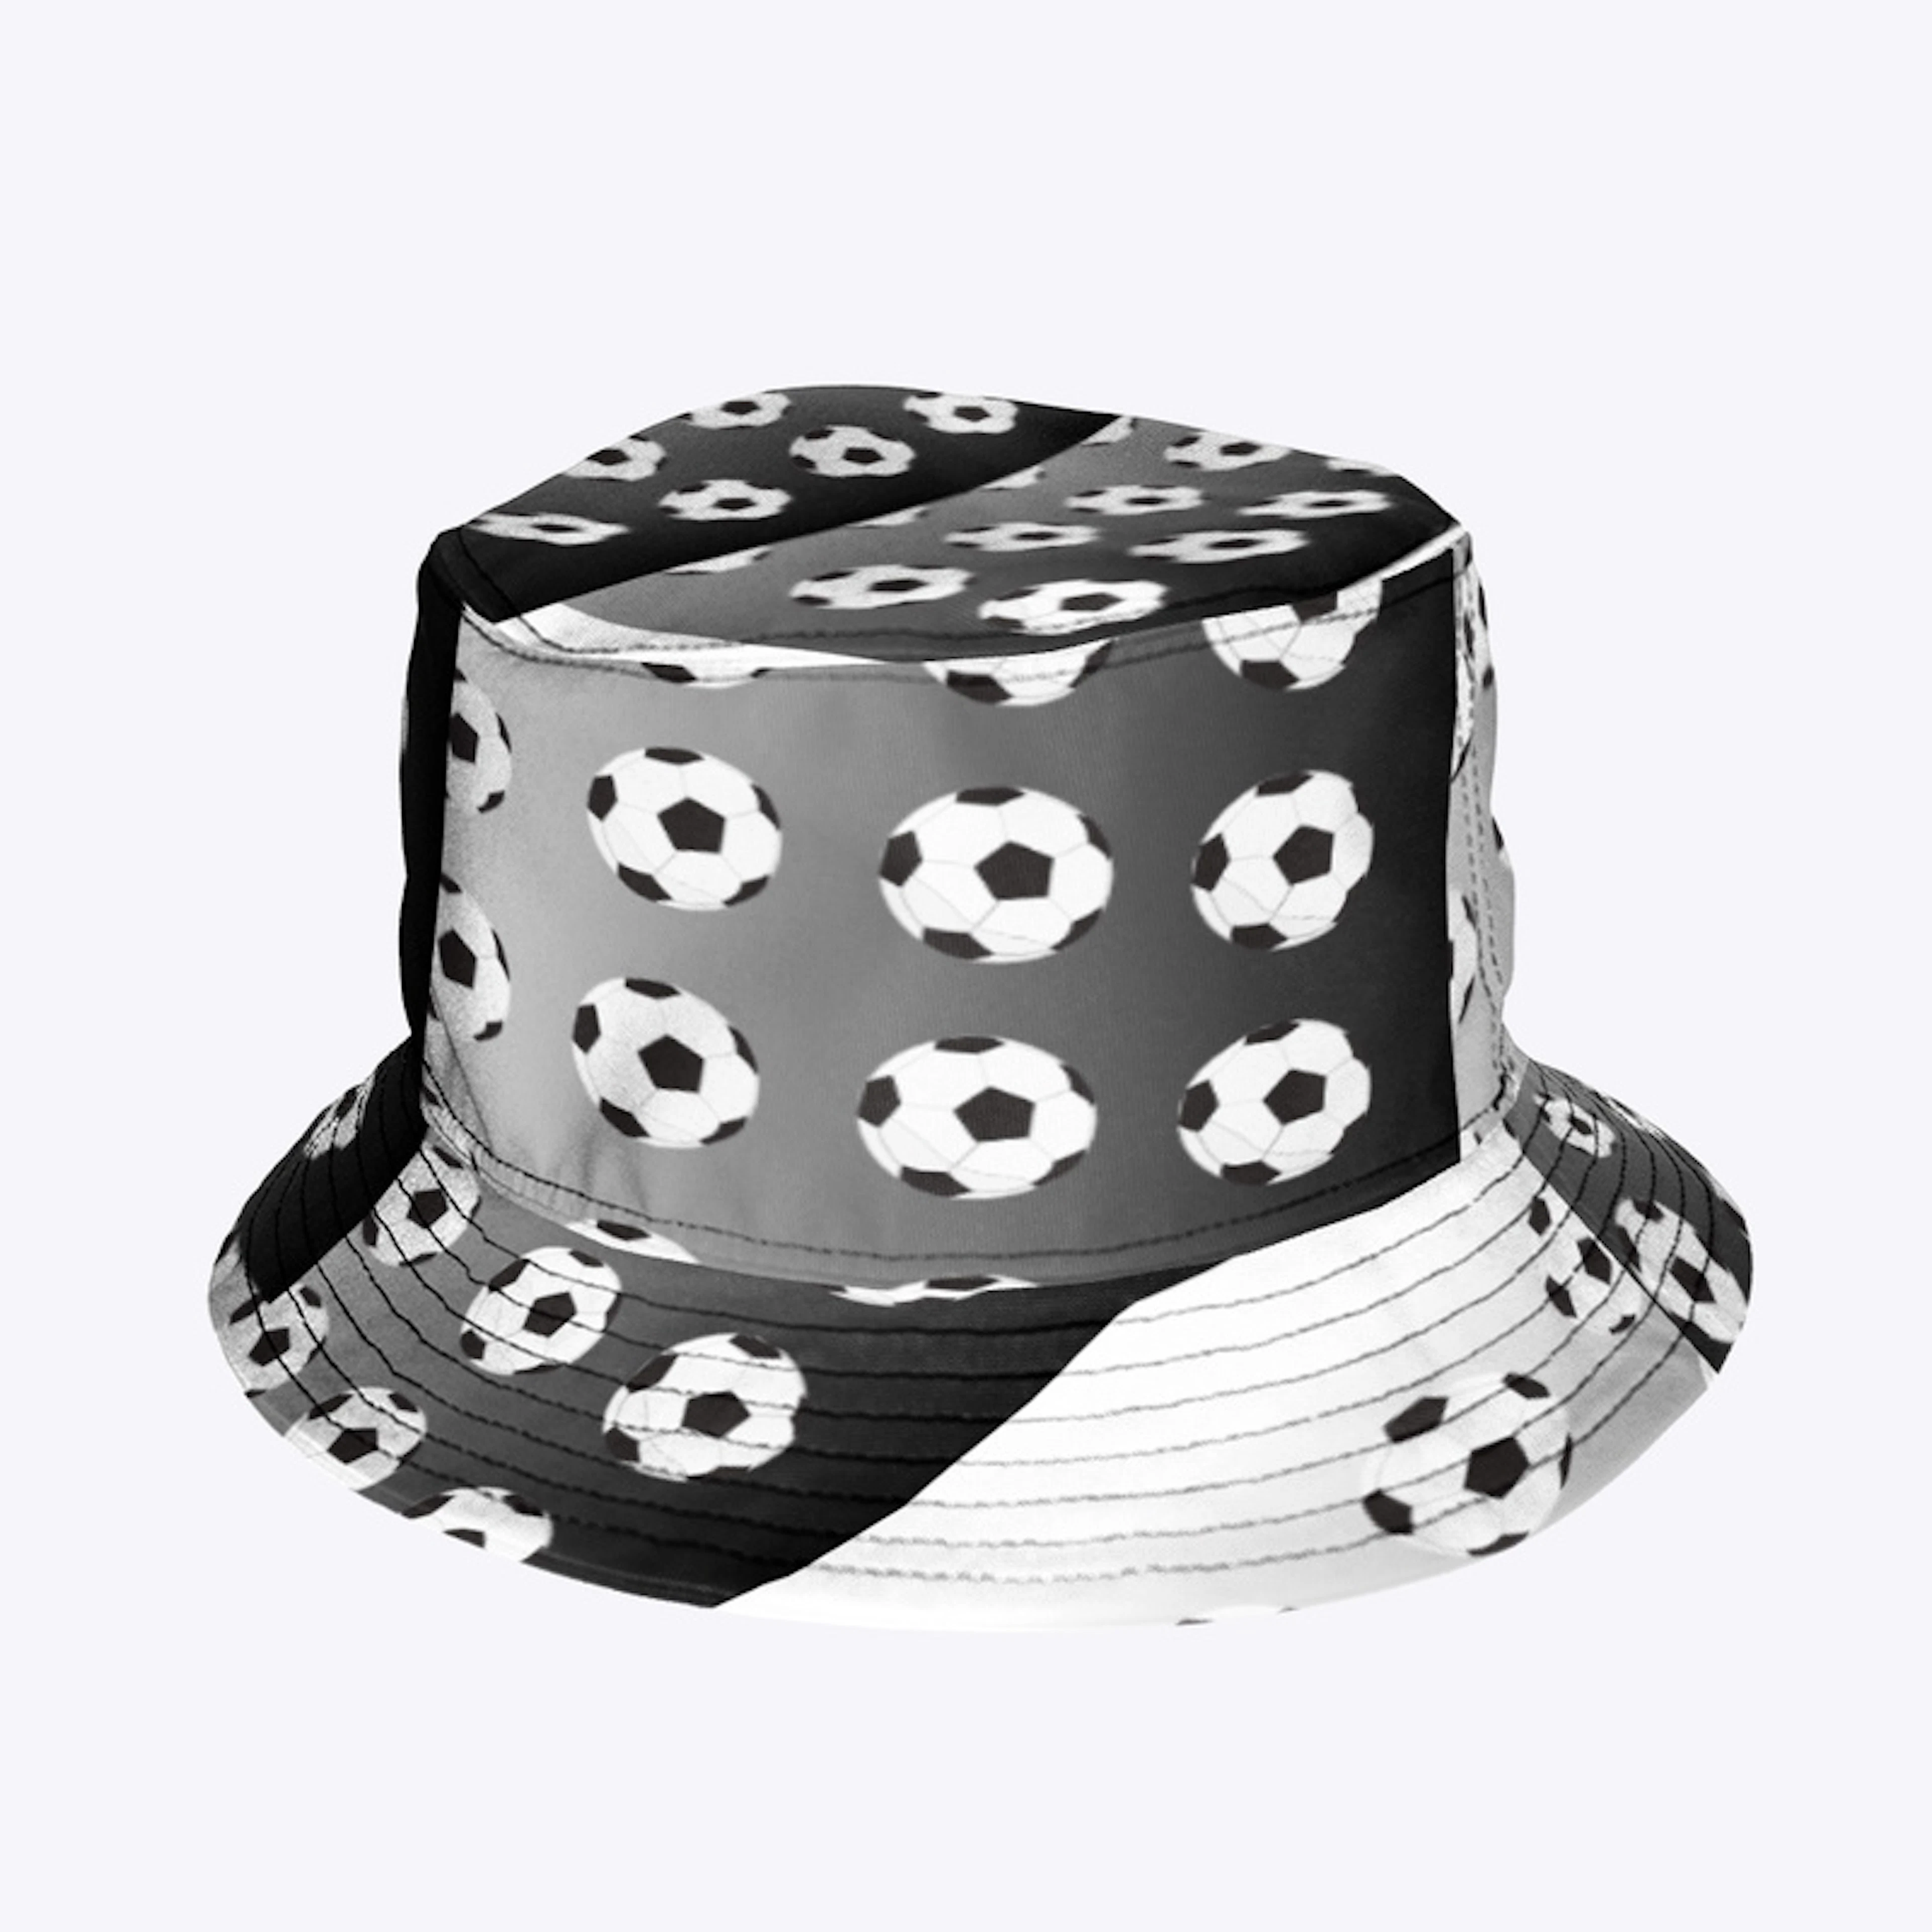 Soccer bucket hat